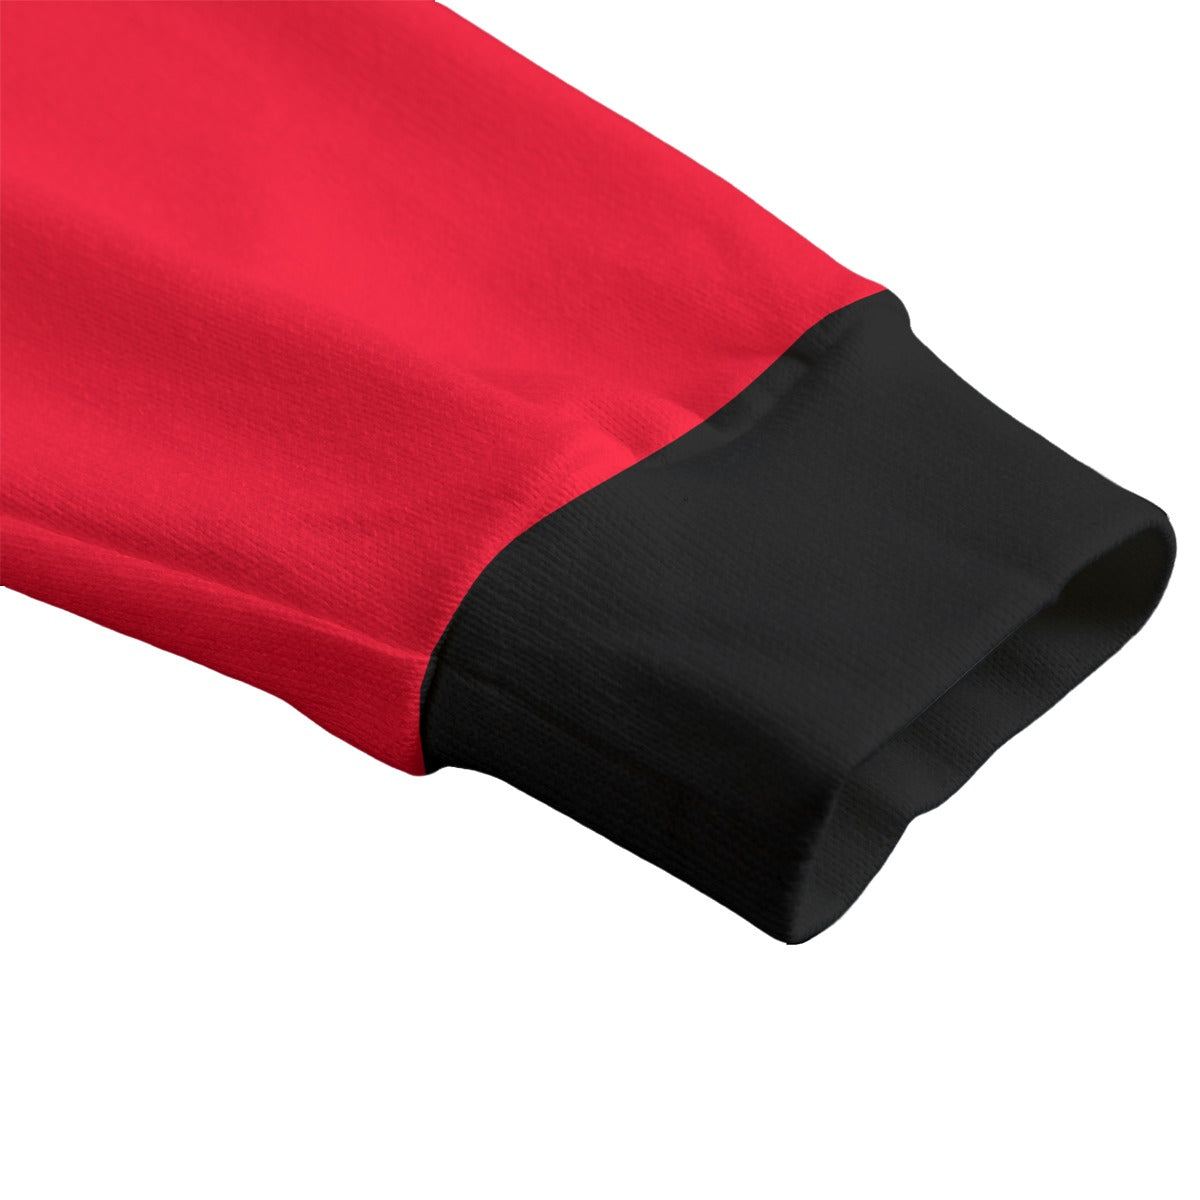 Sixty Eight 93 Logo White Red & Black Unisex V-Neck Knitted Fleece Cardigan